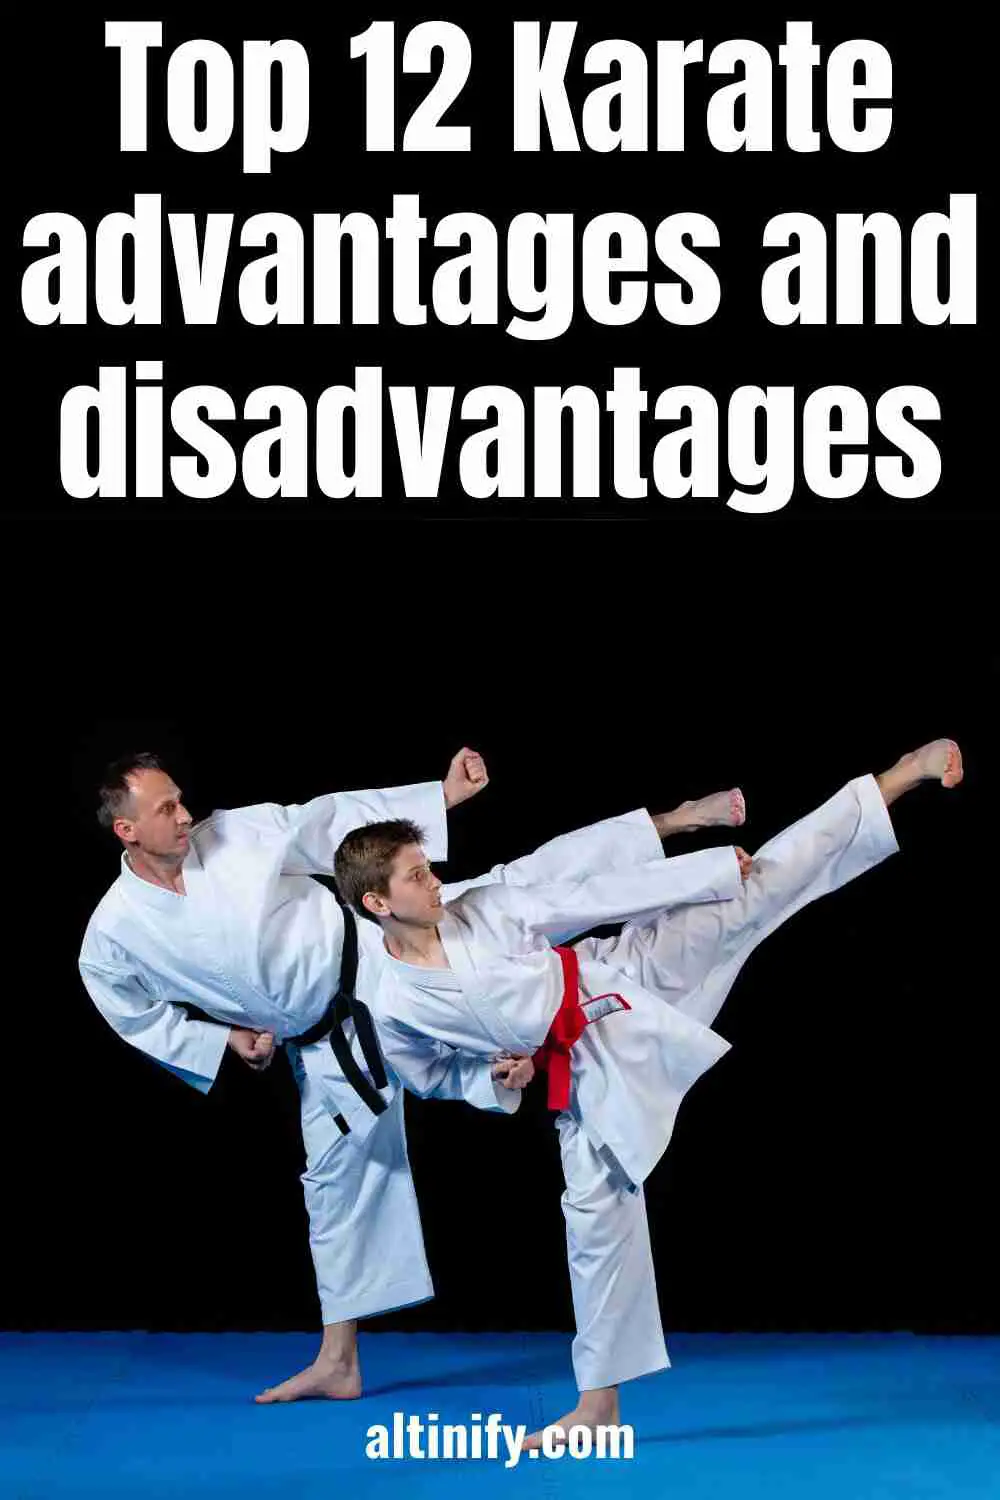 Top 12 Karate advantages and disadvantages